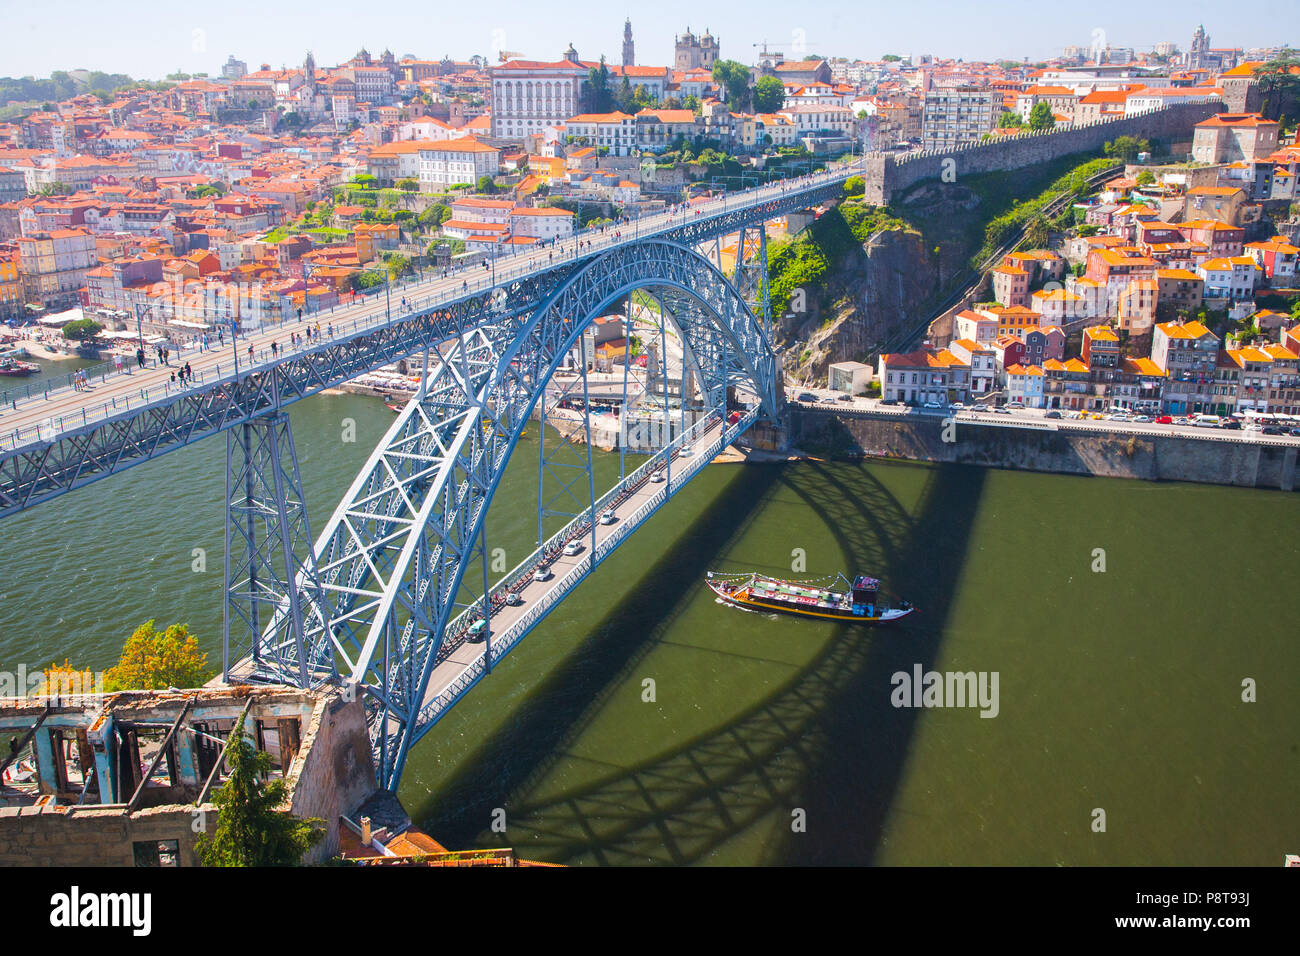 The Dom Luis Bridge over the river Douro, built in 1886, and linking Oporto and Vila Nova de Gaia on two levels Stock Photo